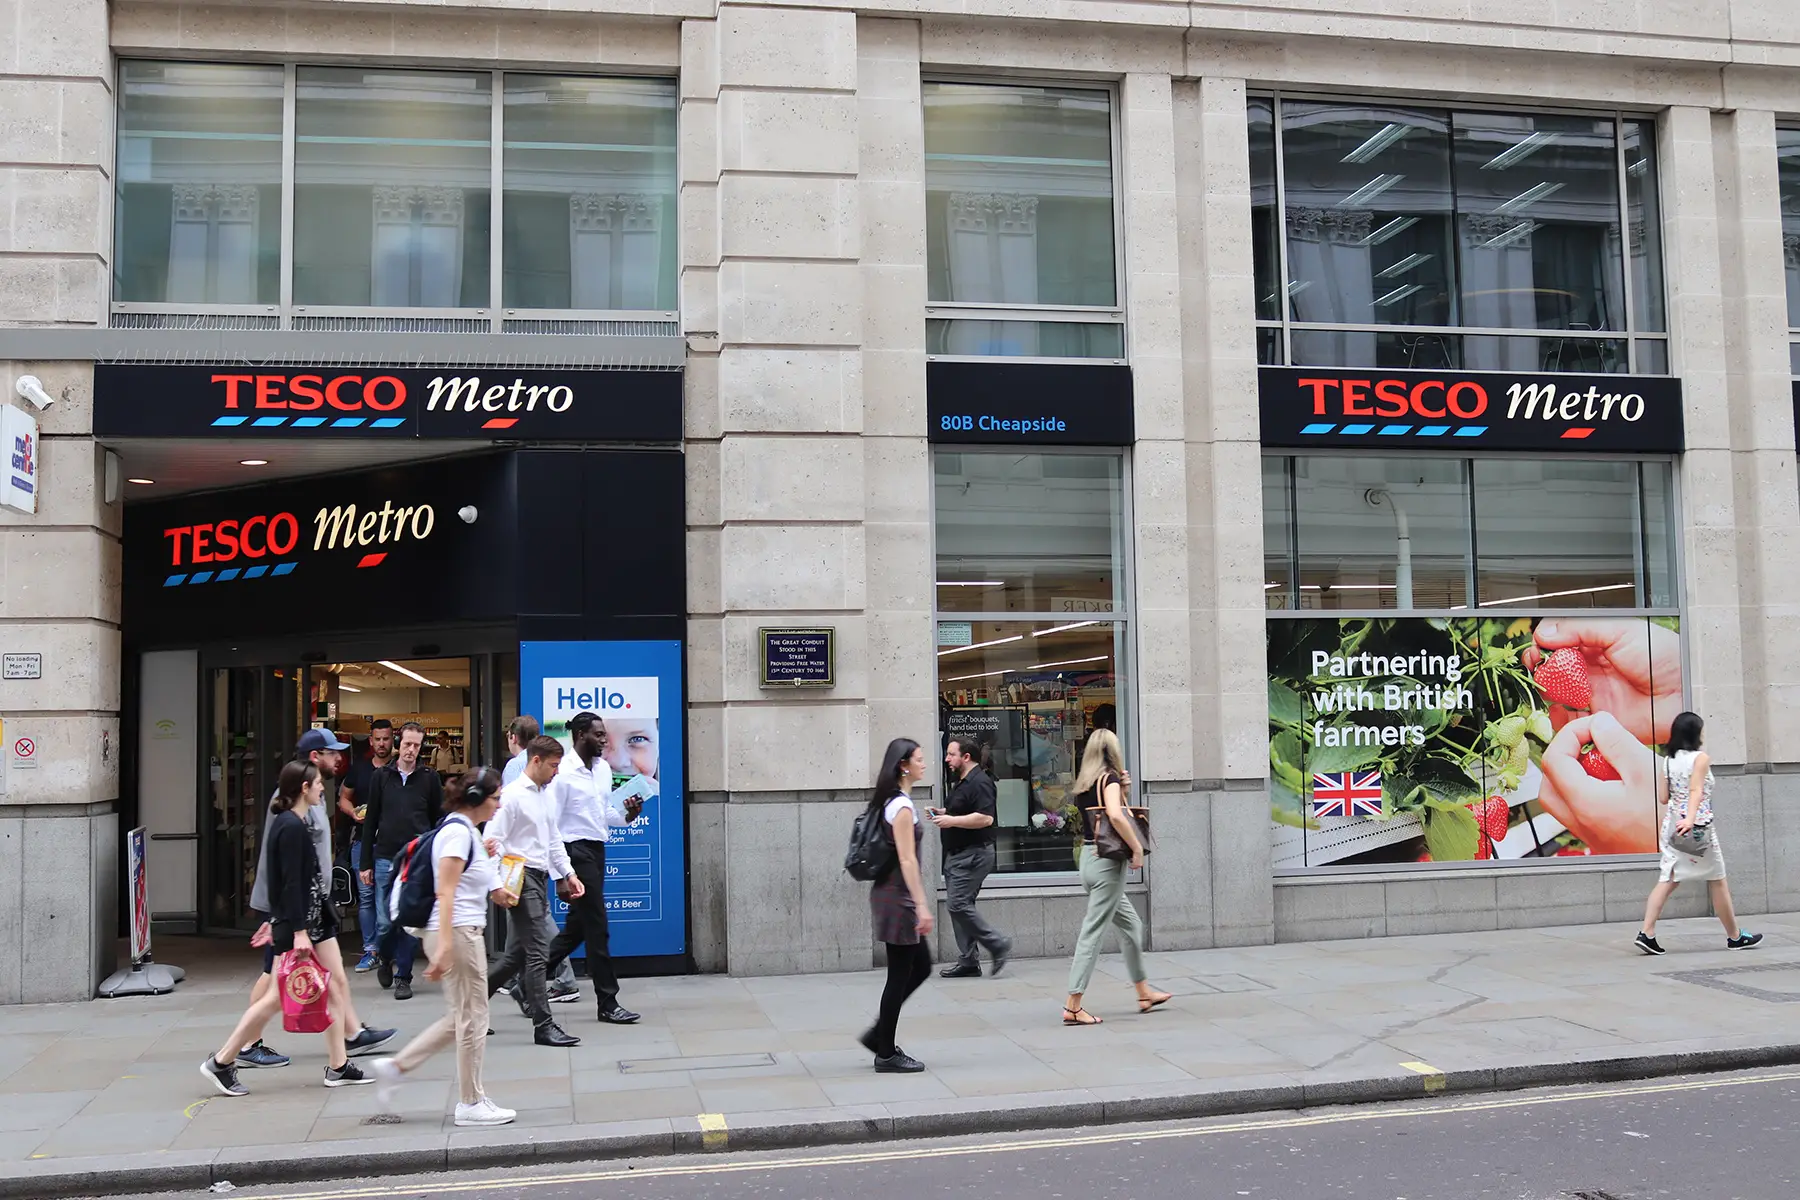 A Tesco Metro supermarket in London, UK